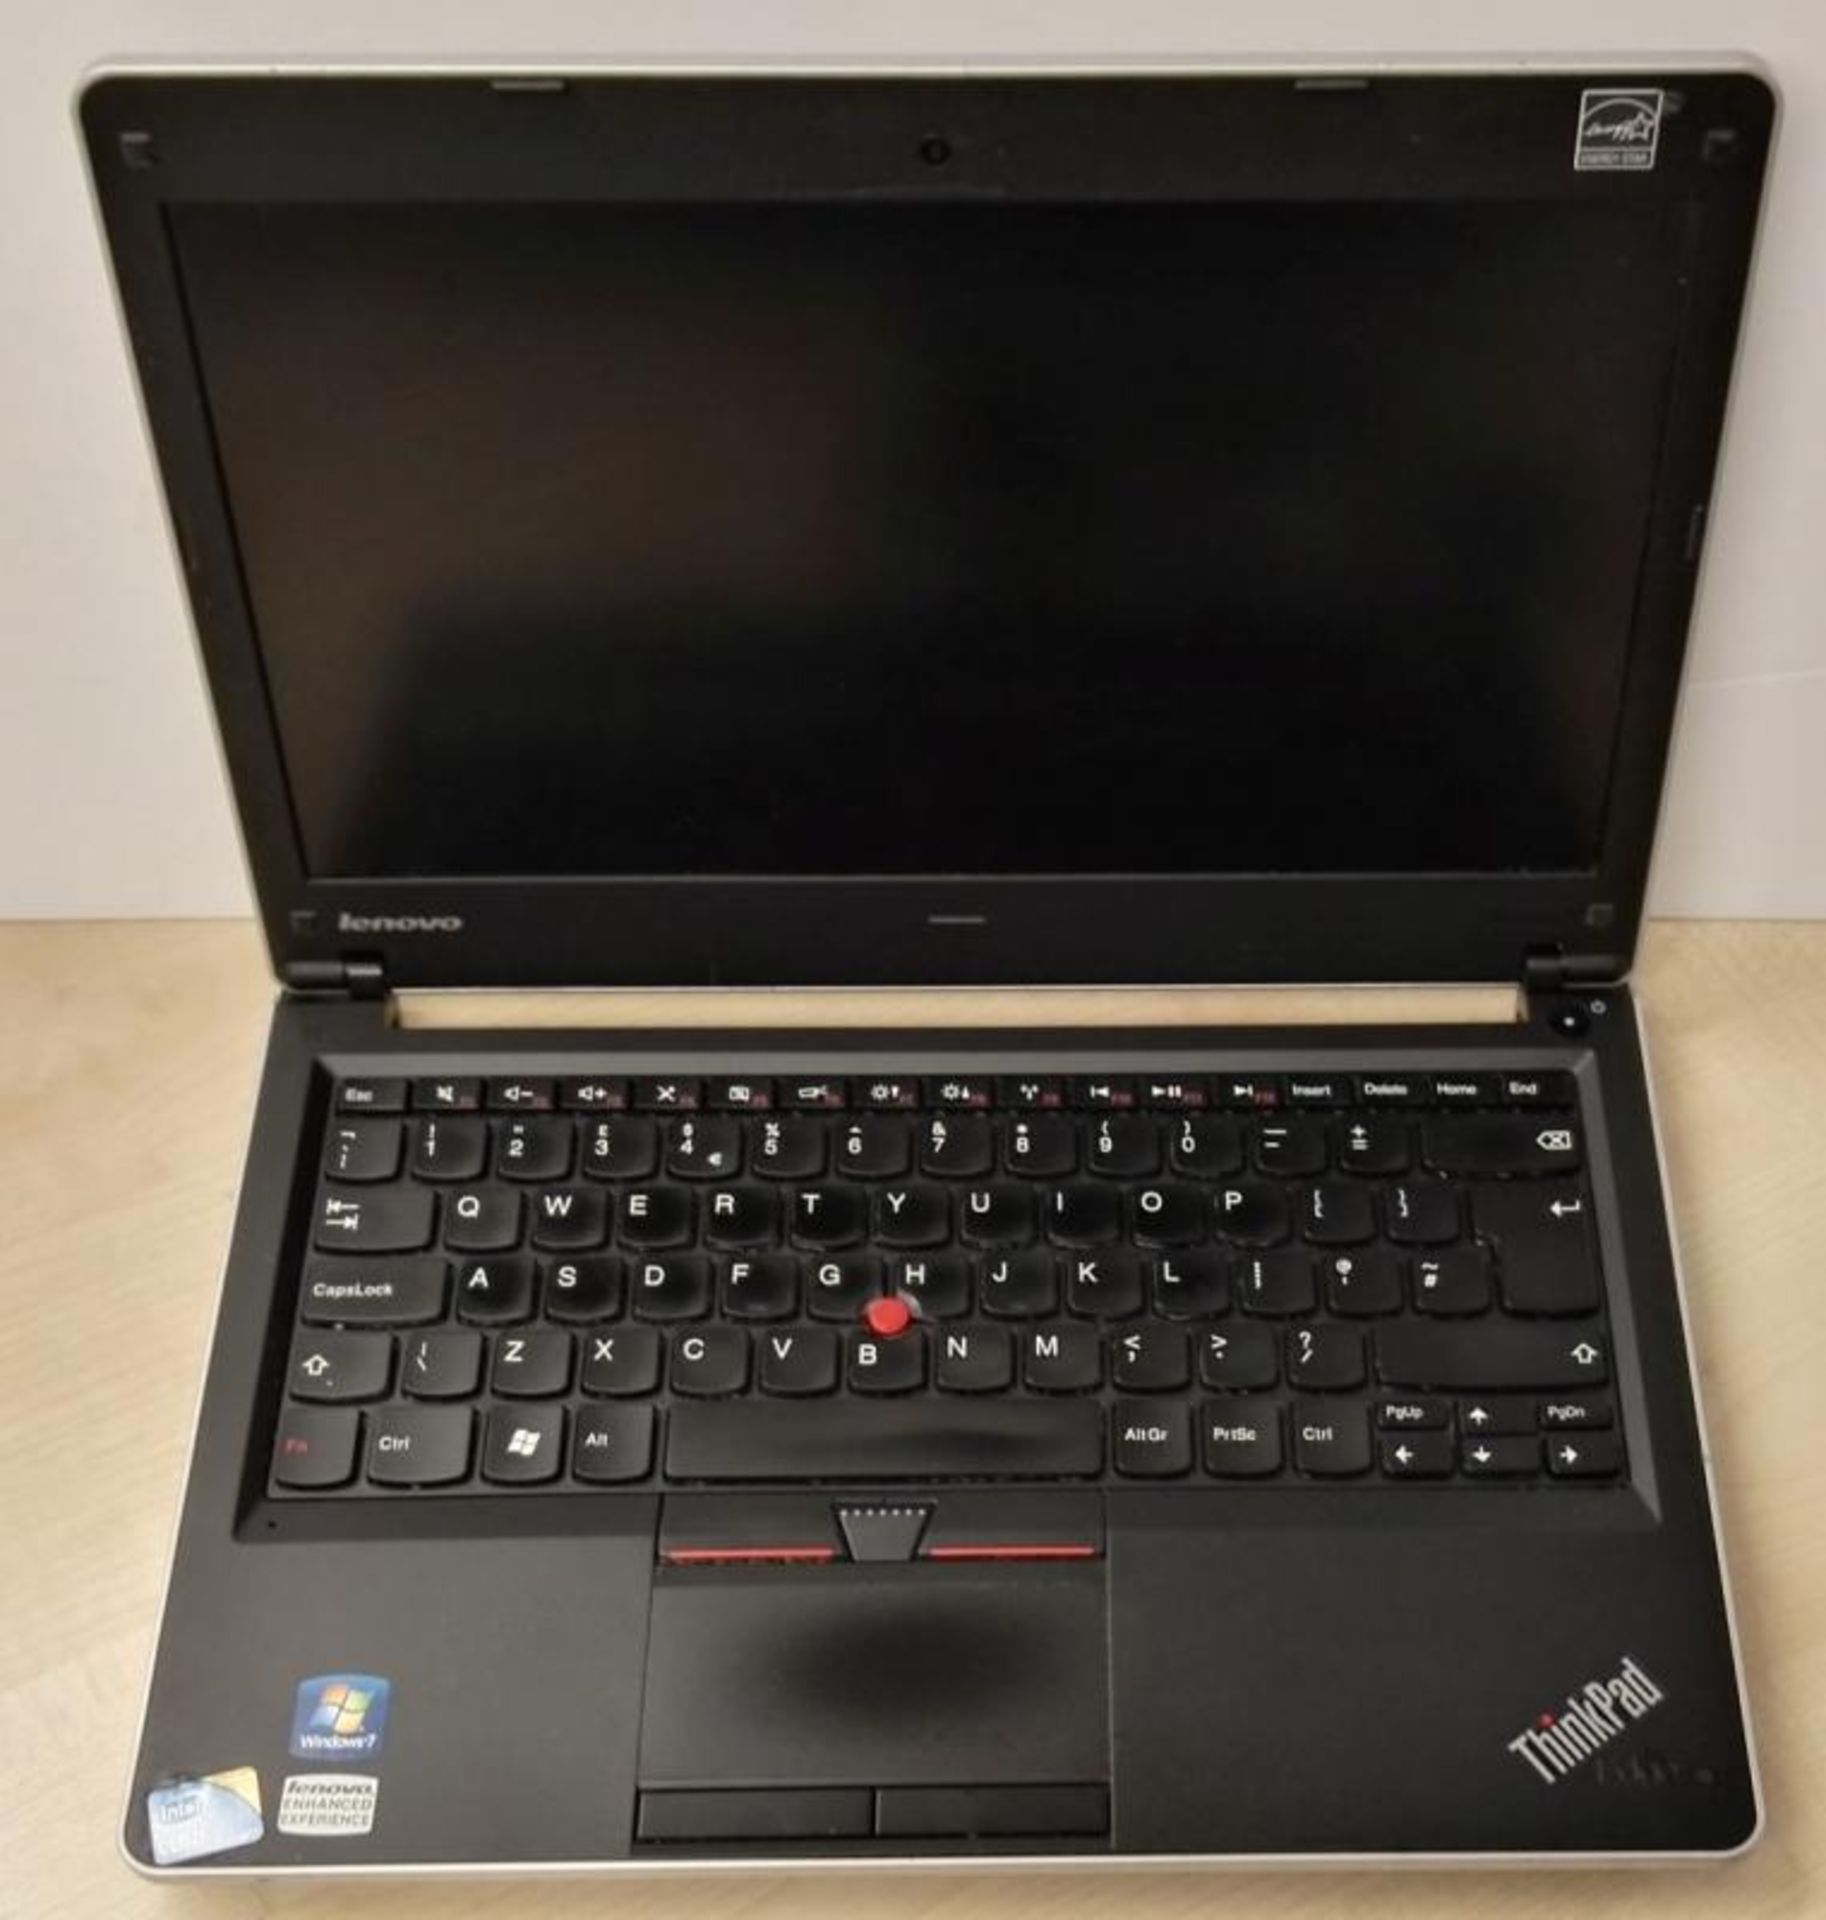 1 x Lenovo Thinkpad Edge 13 i3 Laptop Computer - Features a 13.3 Inch Screen, Intel i3-380U 1330MHz - Image 3 of 9